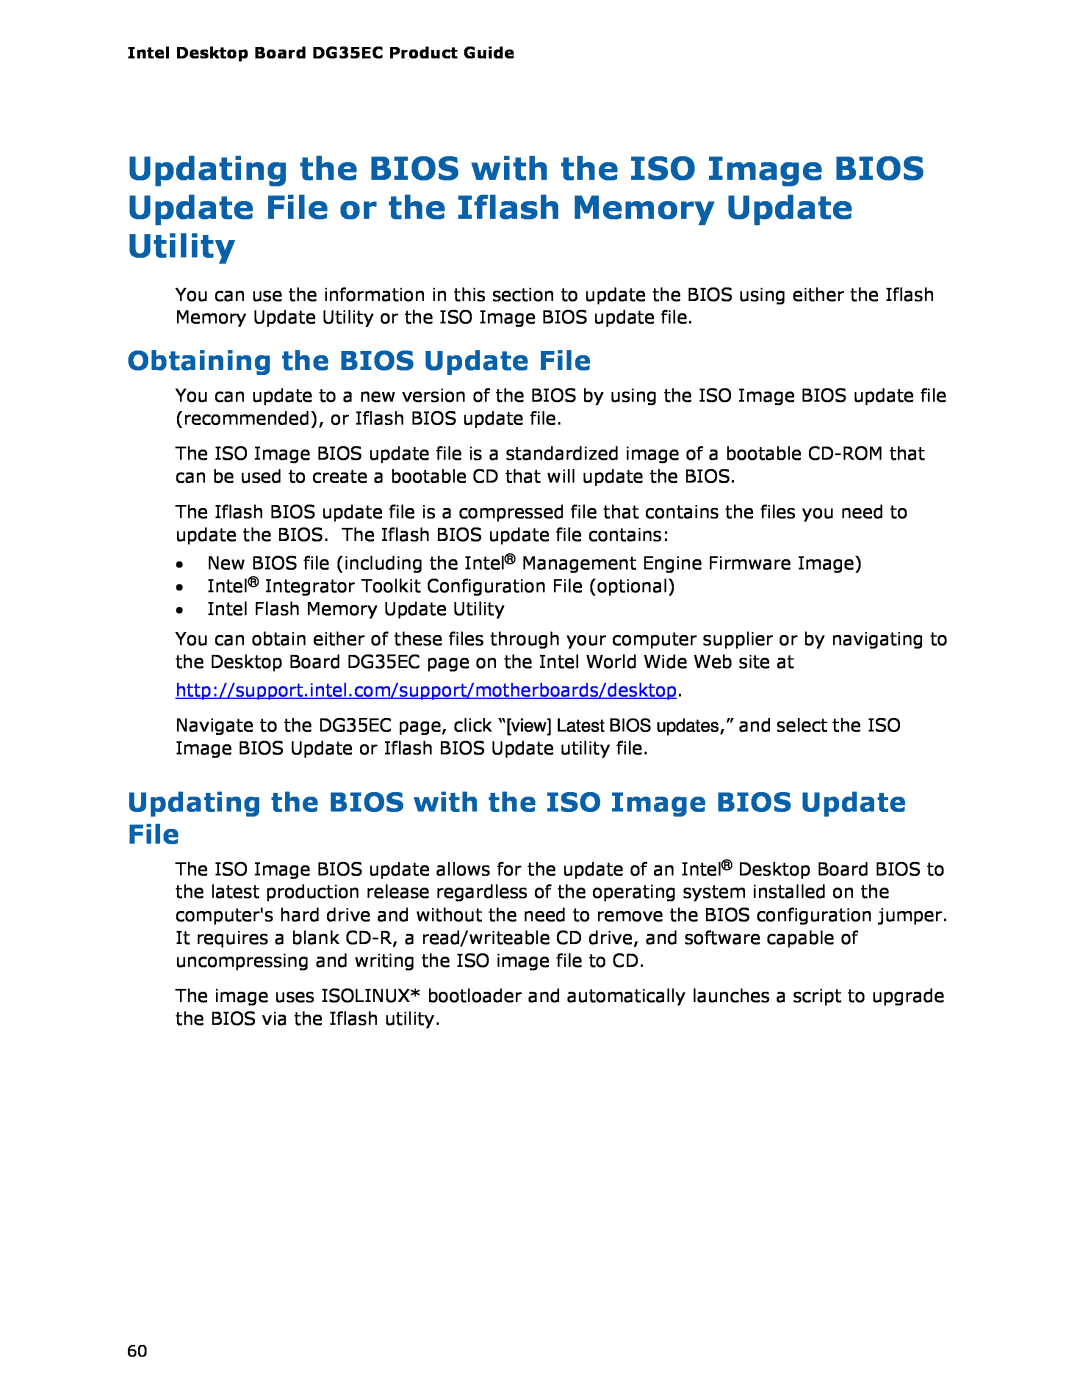 Intel Intel Desktop Board, DG35EC Obtaining the BIOS Update File, Updating the BIOS with the ISO Image BIOS Update File 